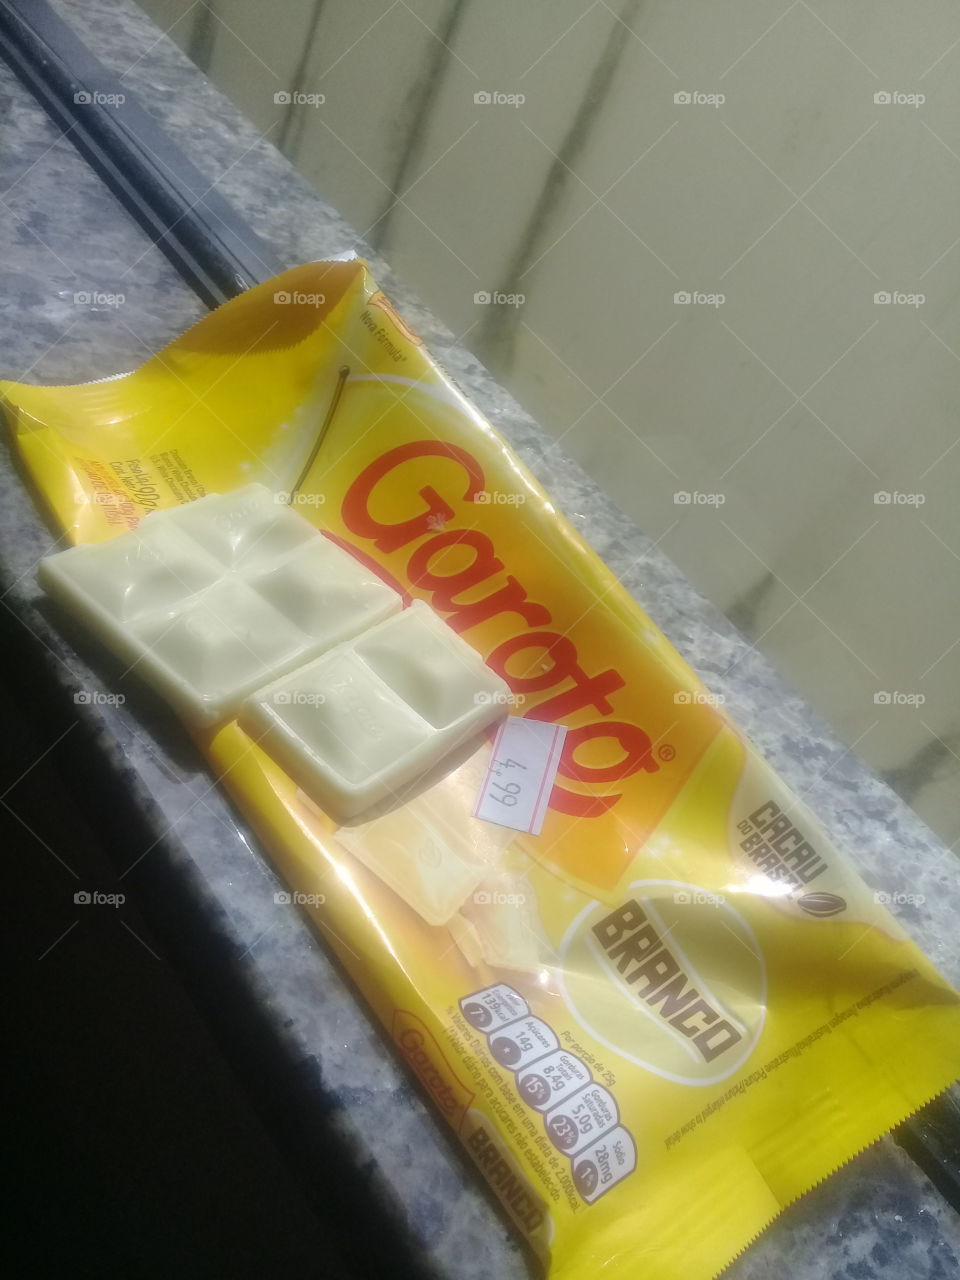 chocolate Garoto